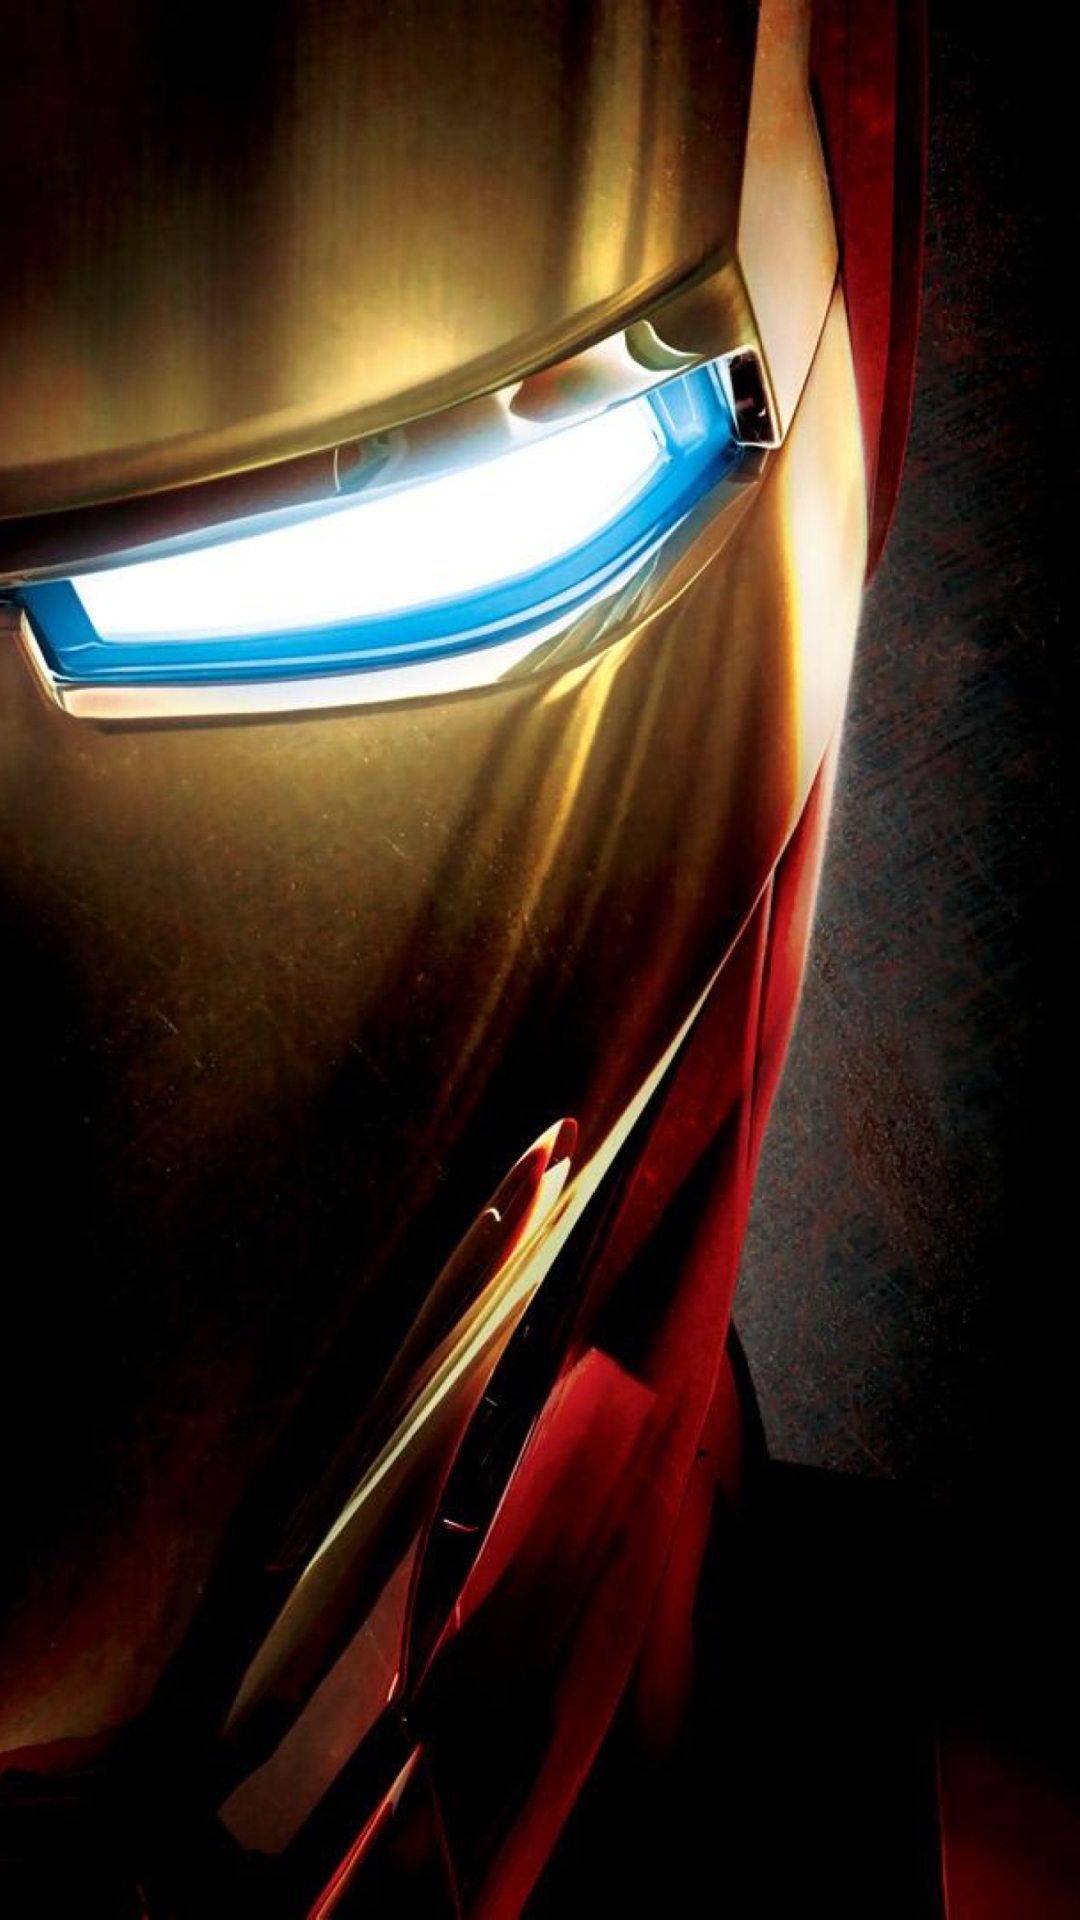 Iron Man screenshot #1 1080x1920